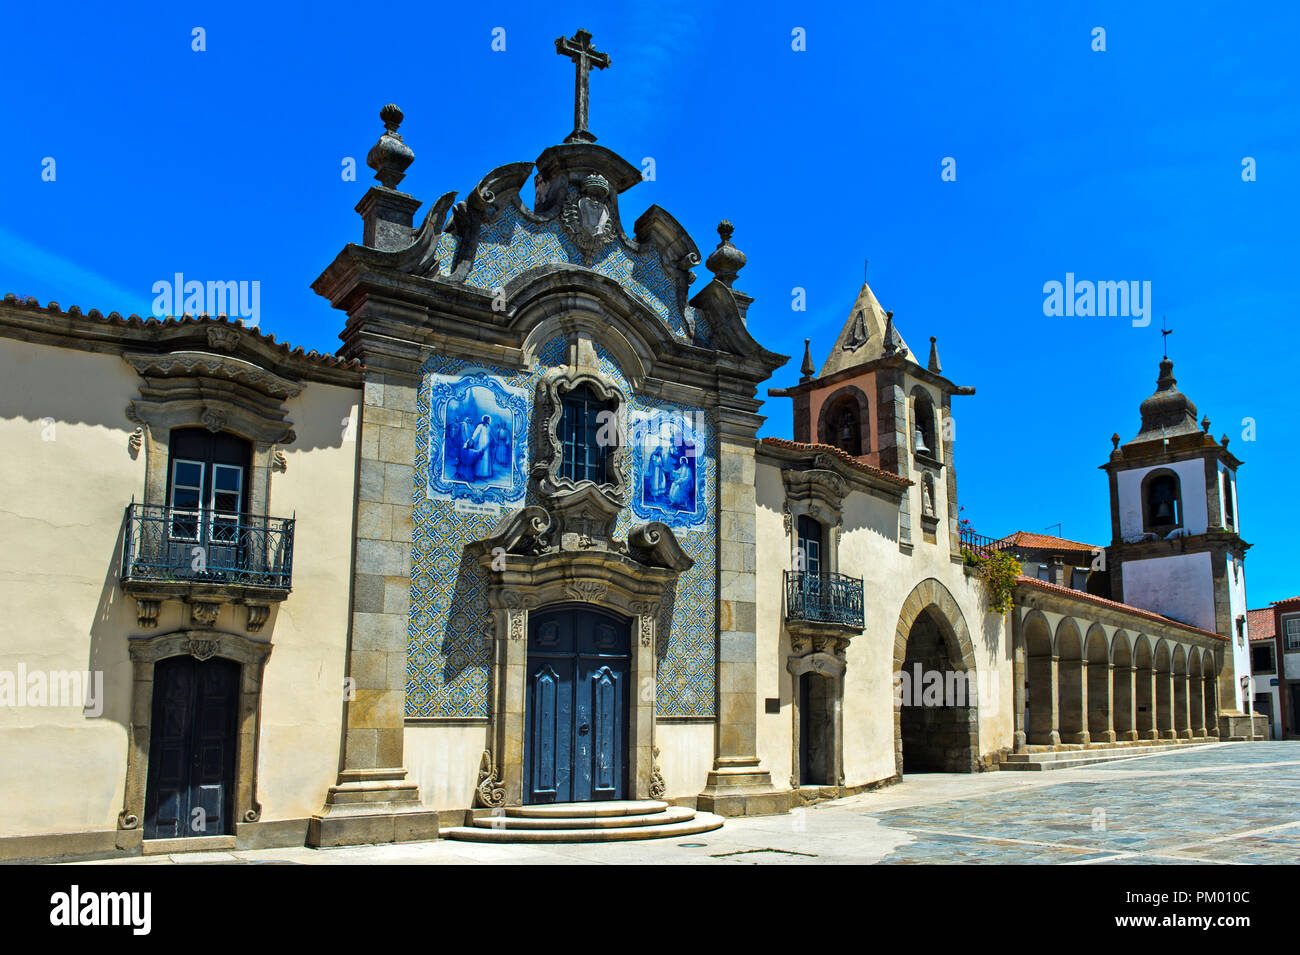 Chapelle de la miséricorde, Capela da Misericórdia, Sao Joao da Pesqueira, Portugal Banque D'Images